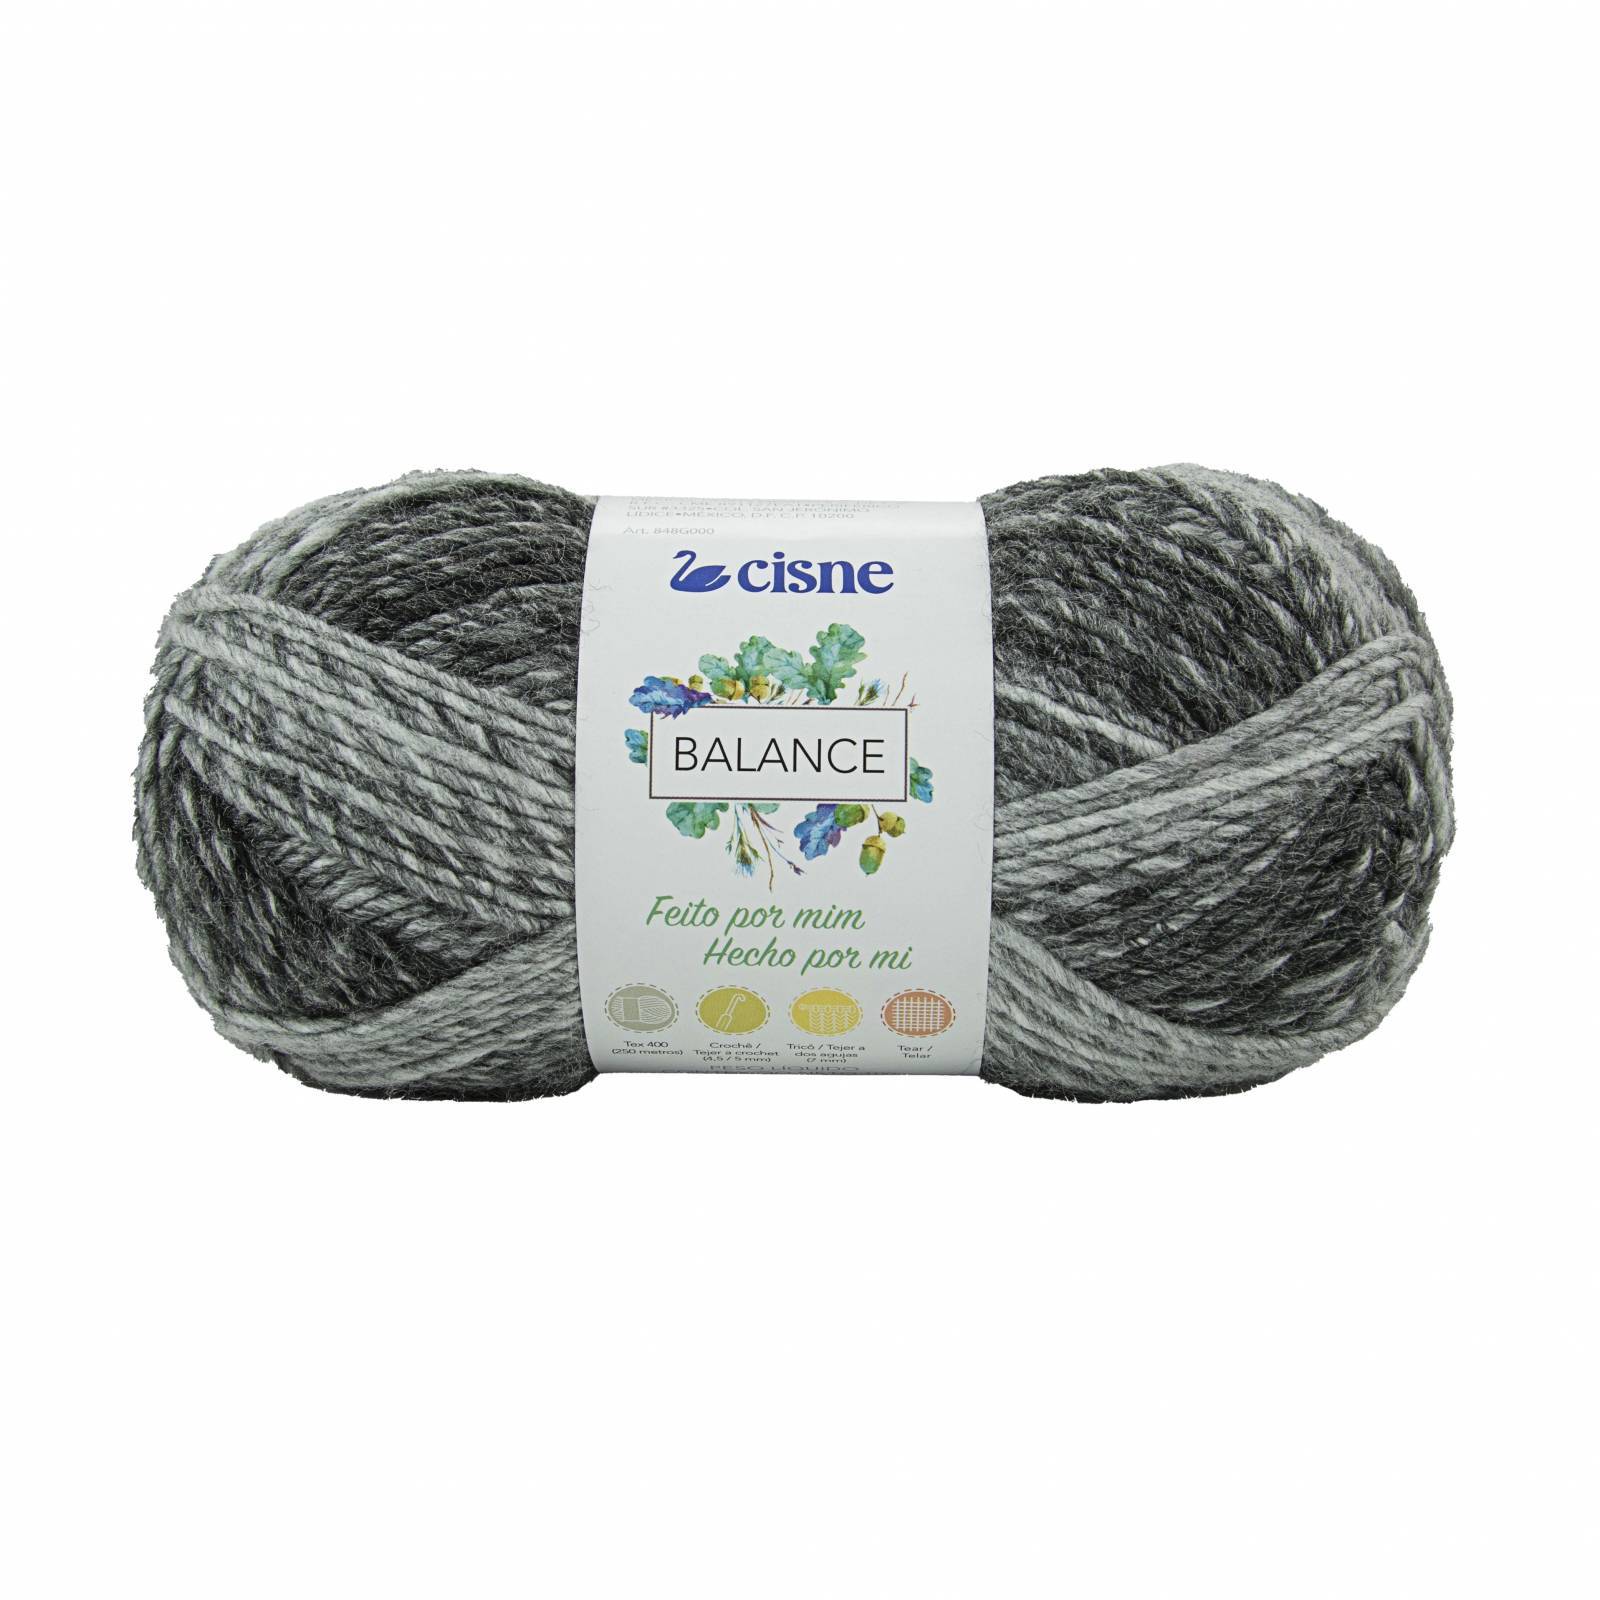 Lã Balance cor 108